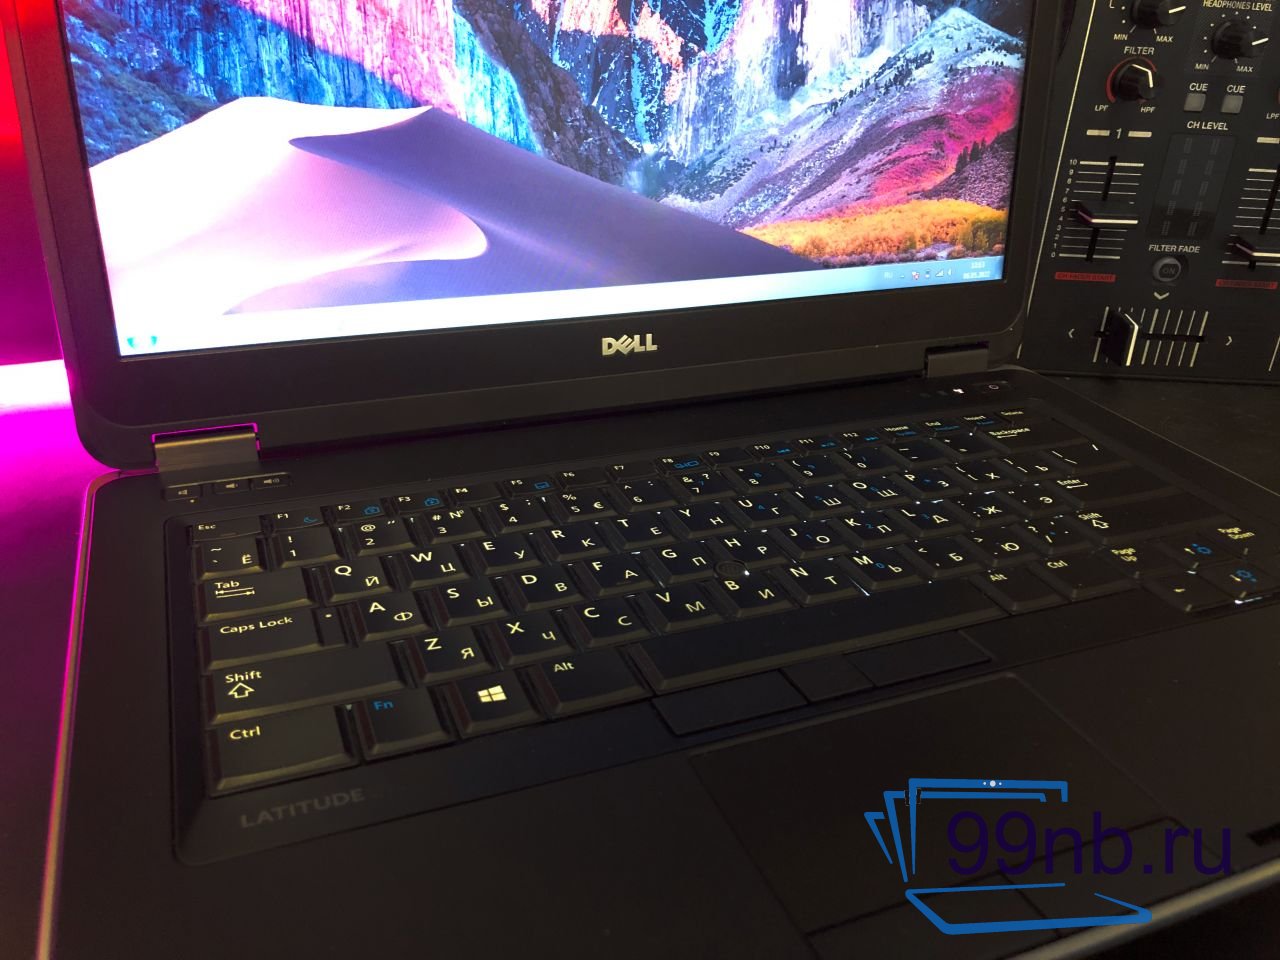  Мощный ноутбук Dell i5/SSD